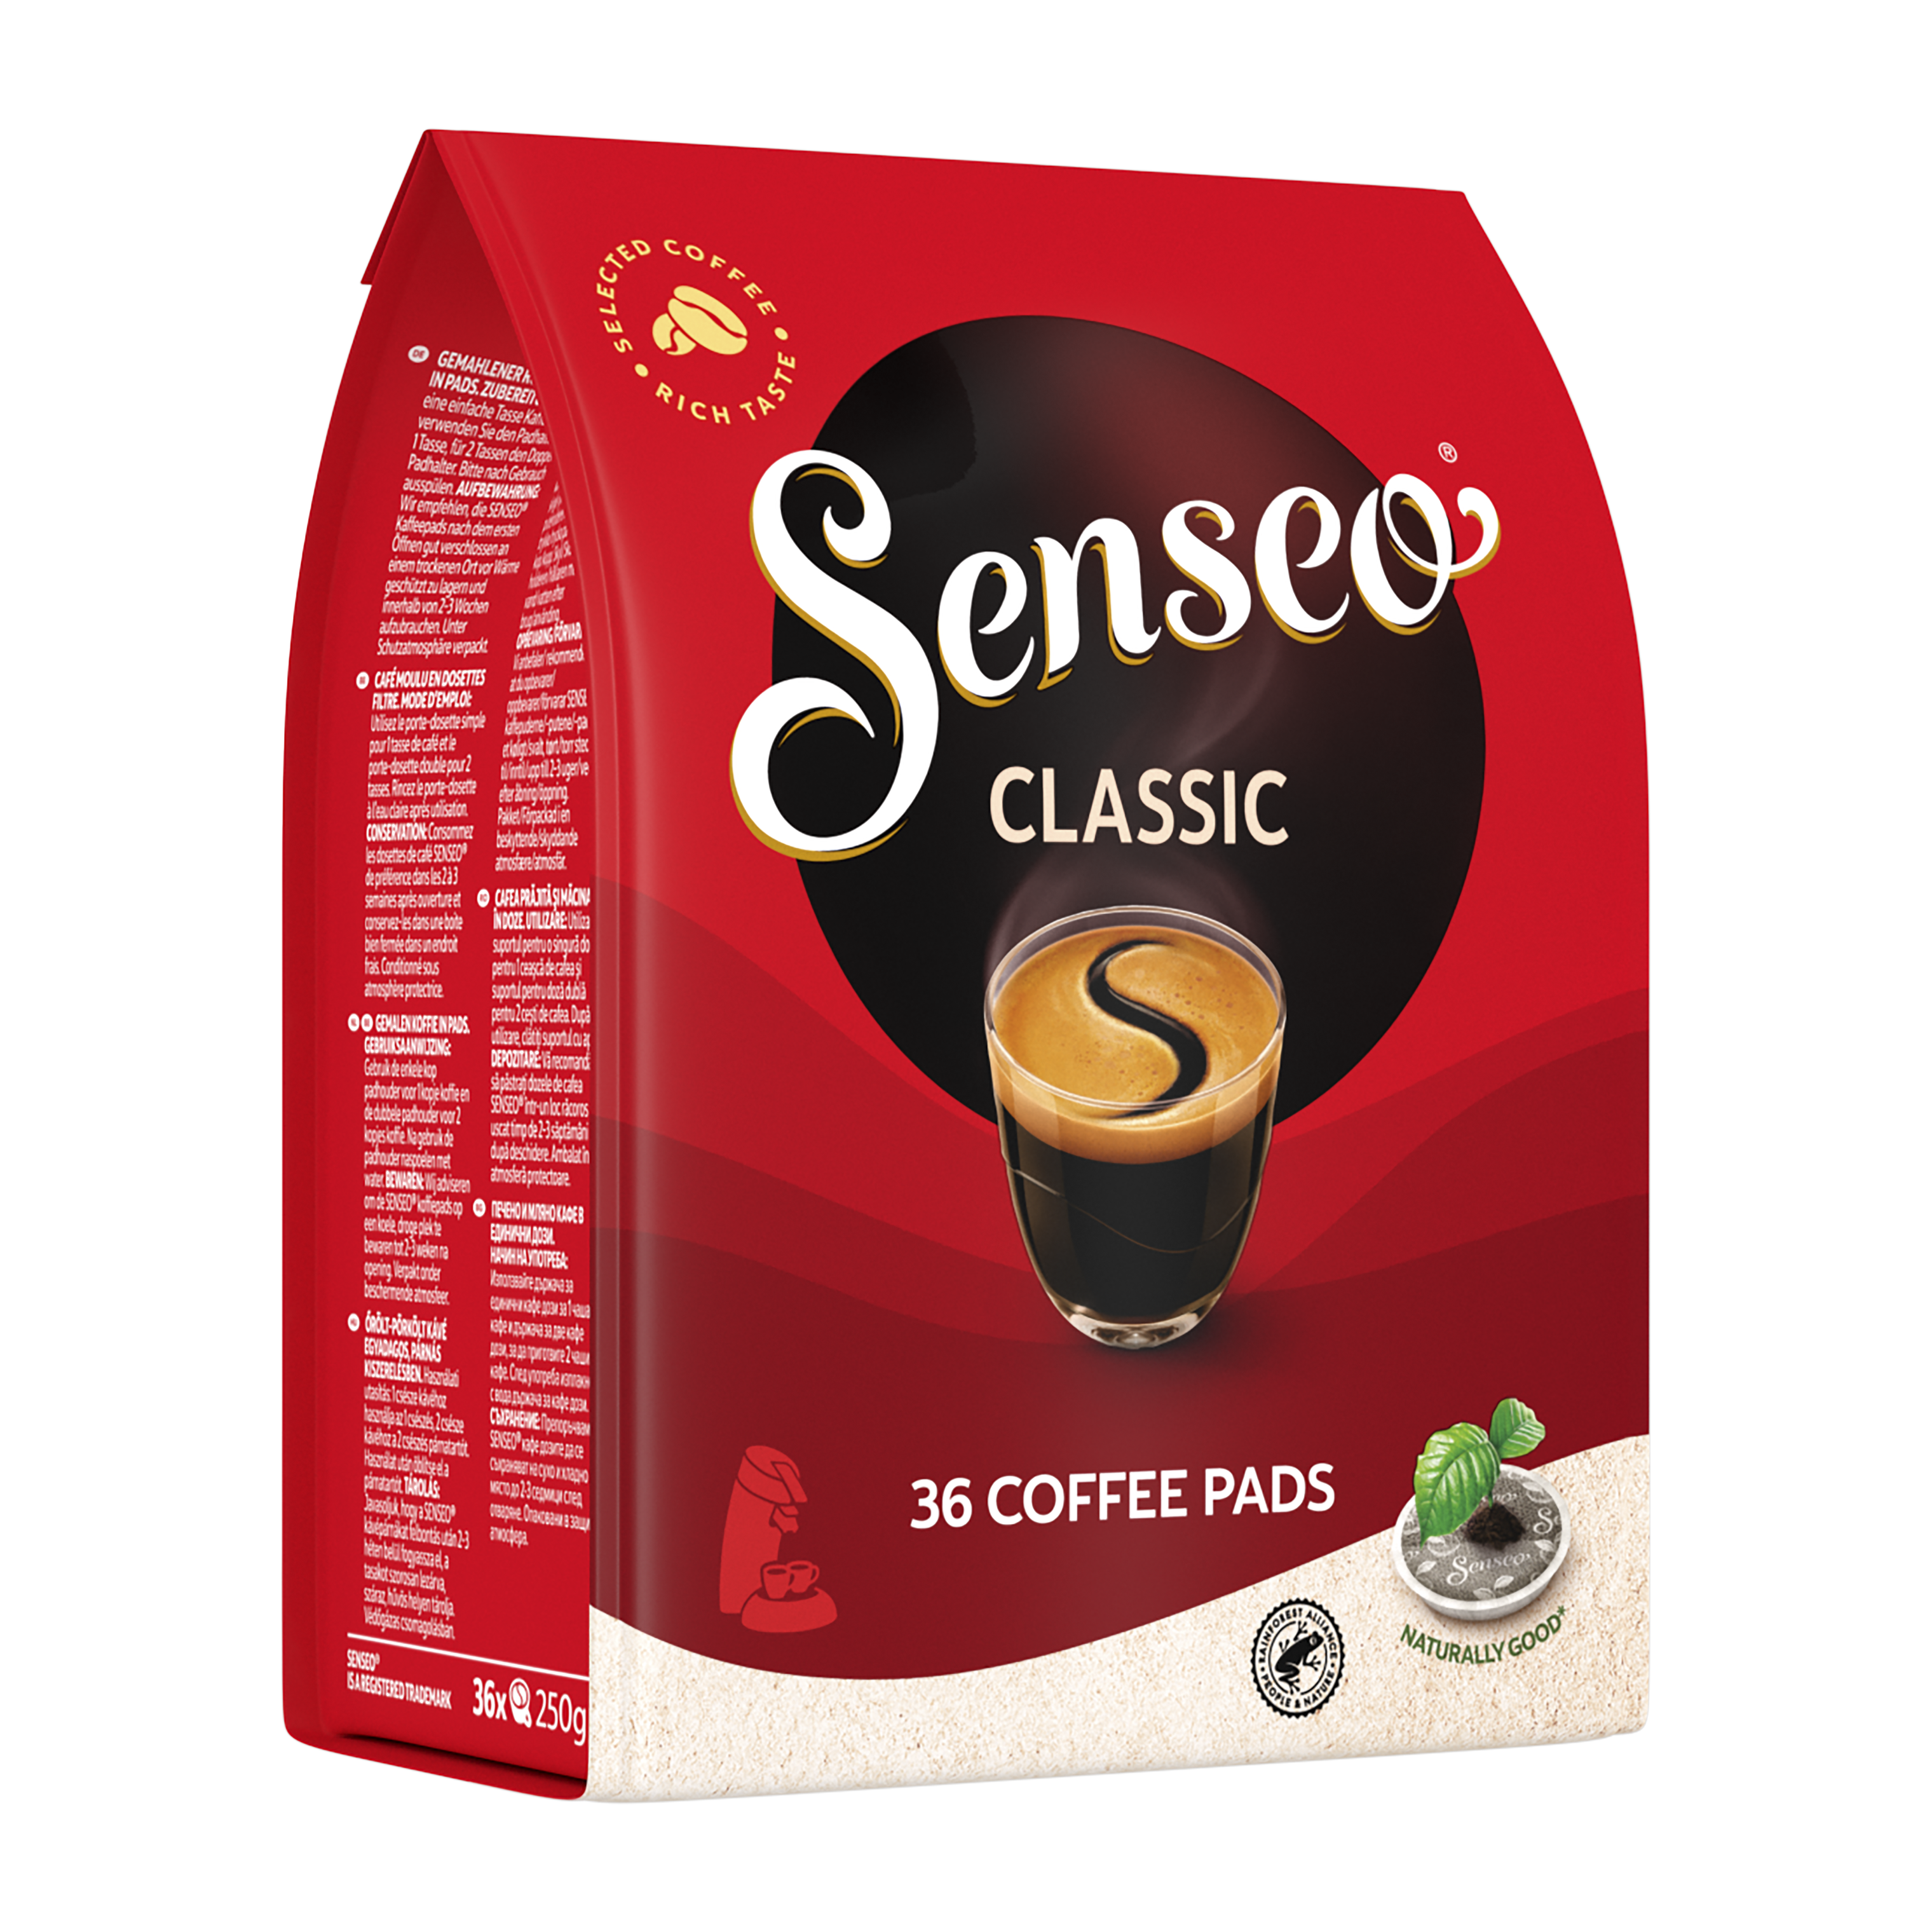 rol Overleving In beweging Senseo Koffiepads